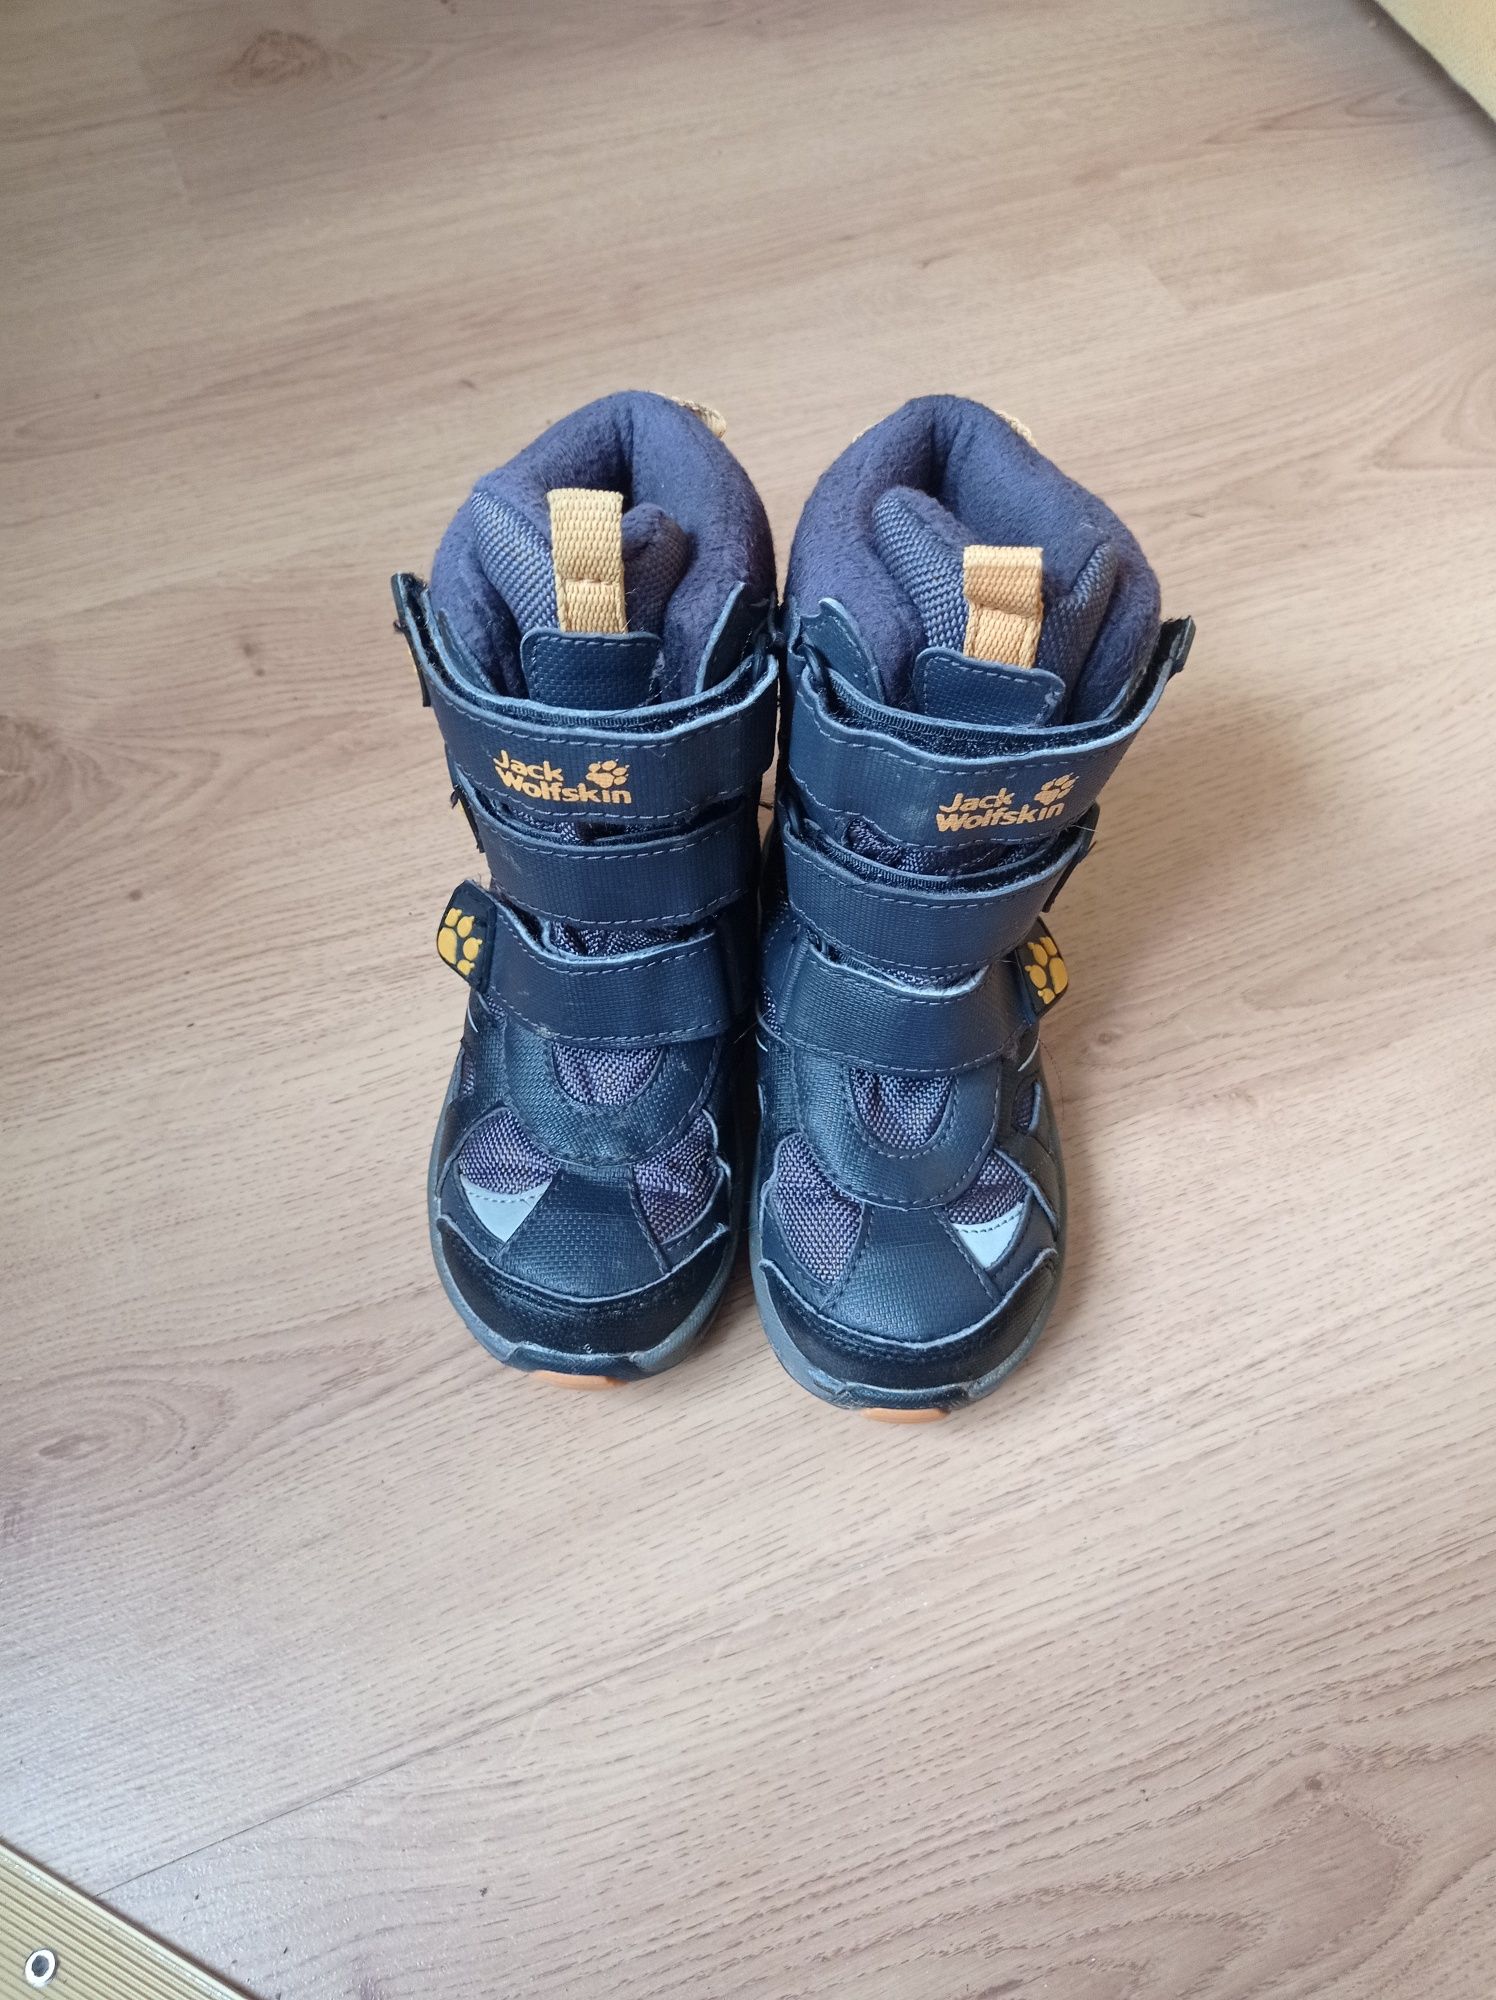 Ботинки Jack Wolfskin зимние сапоги чоботи зимові черевики